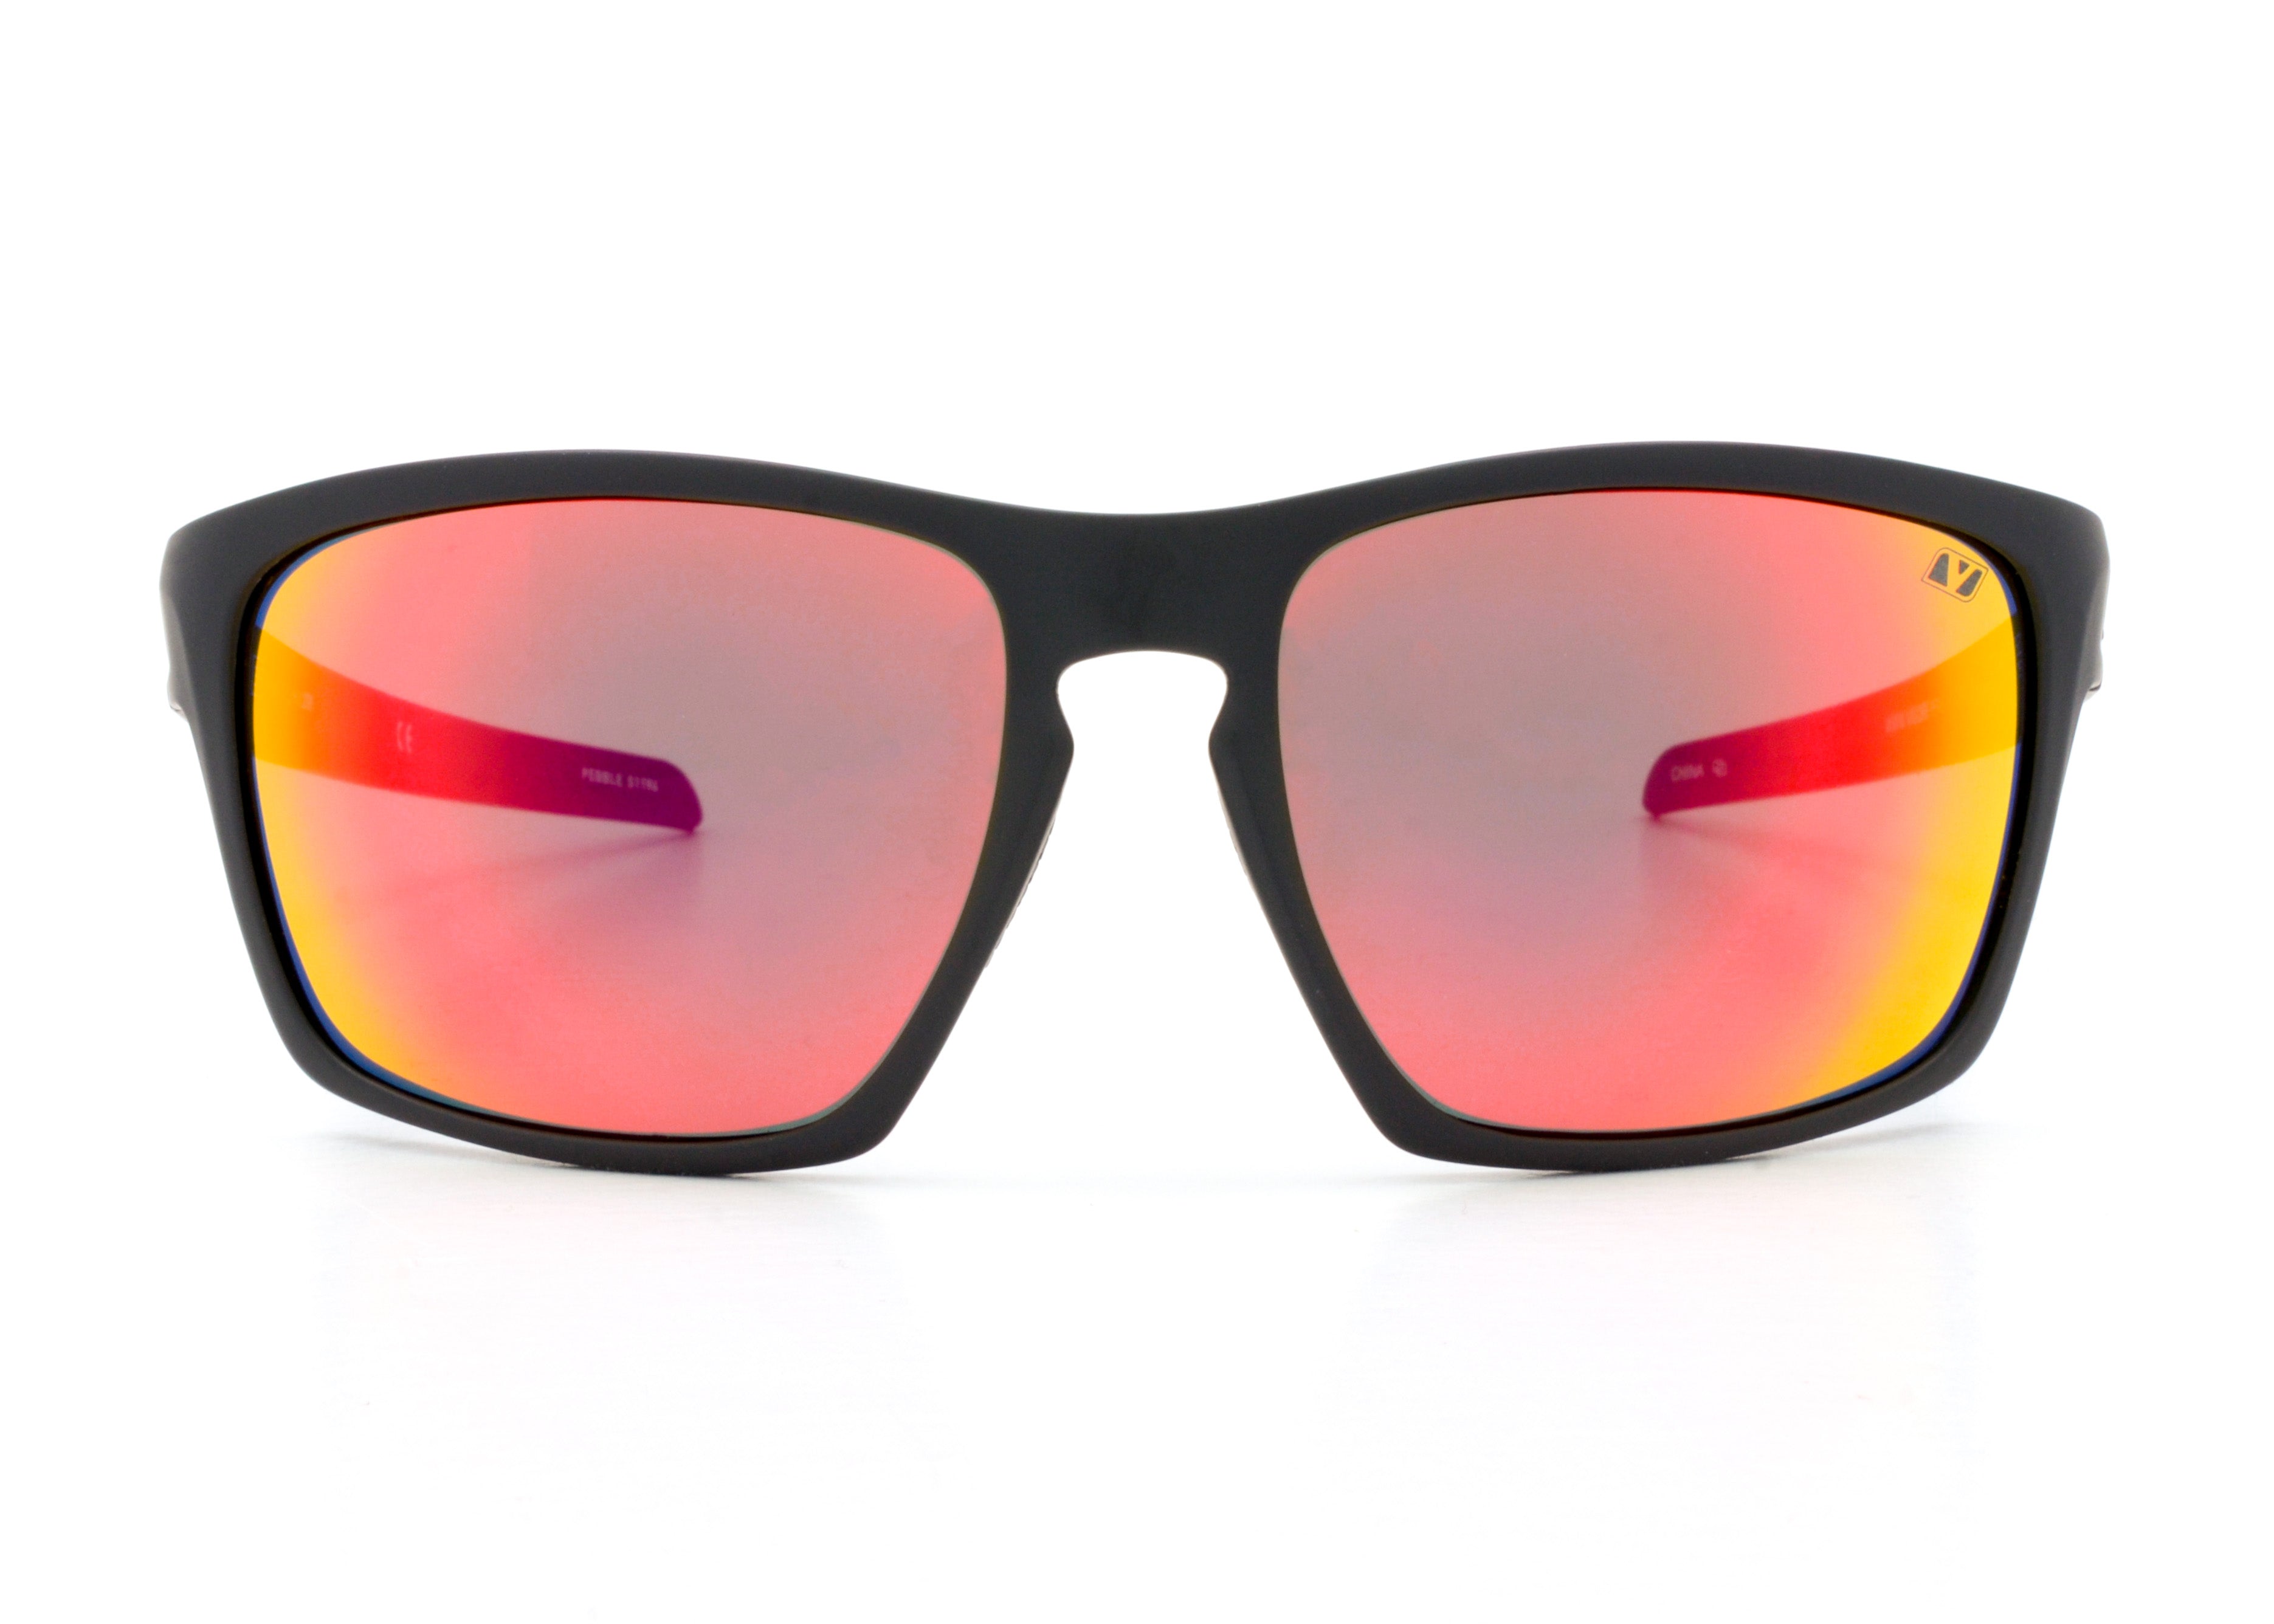  Clearance Polarized Sunglasses